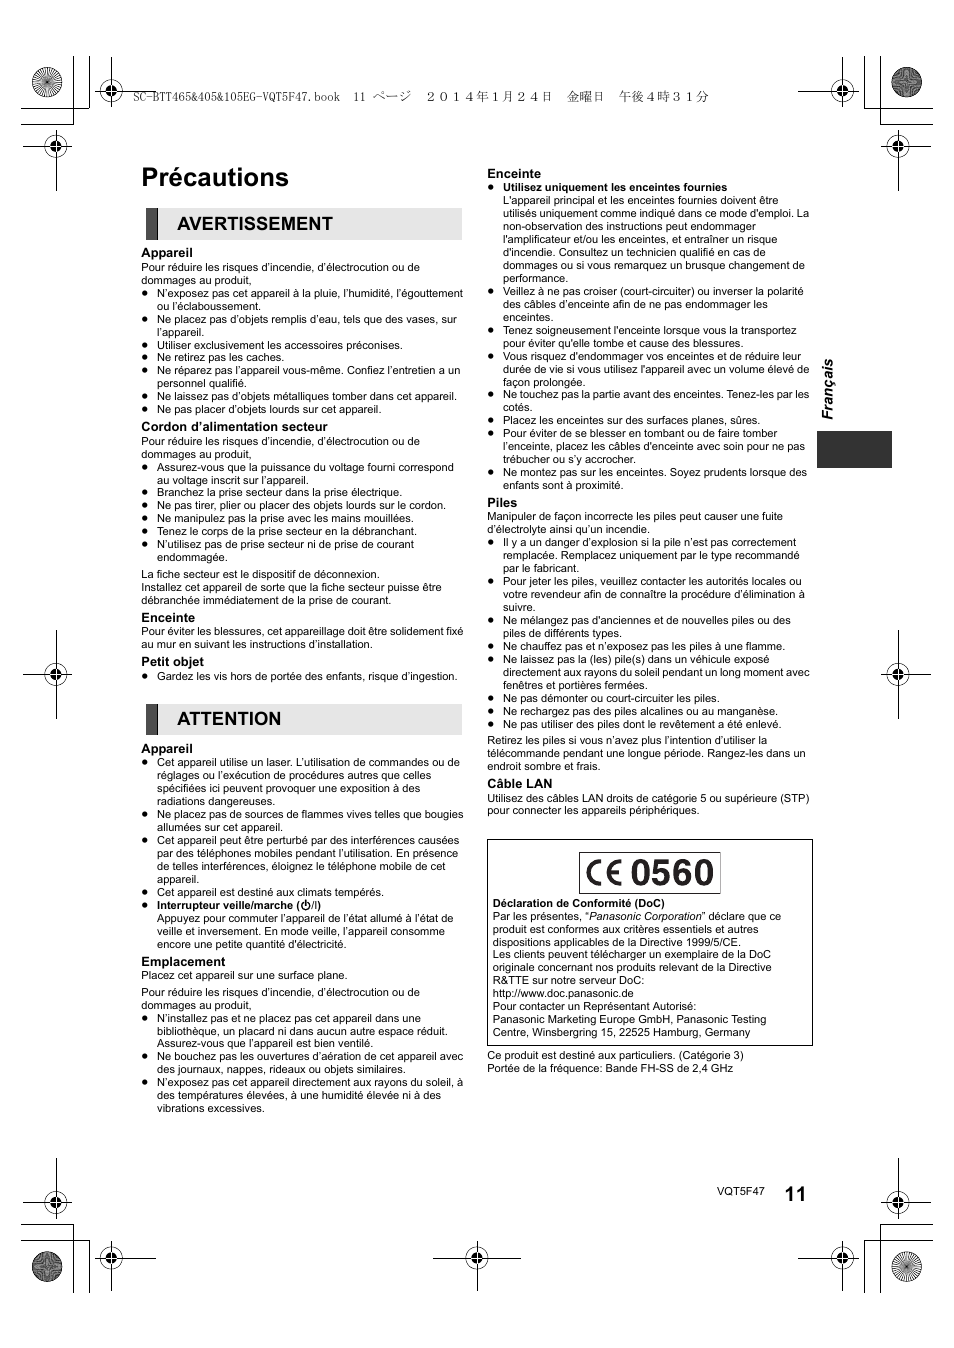 Précautions, Avertissement attention | Panasonic SCBTT405EG User Manual | Page 11 / 72